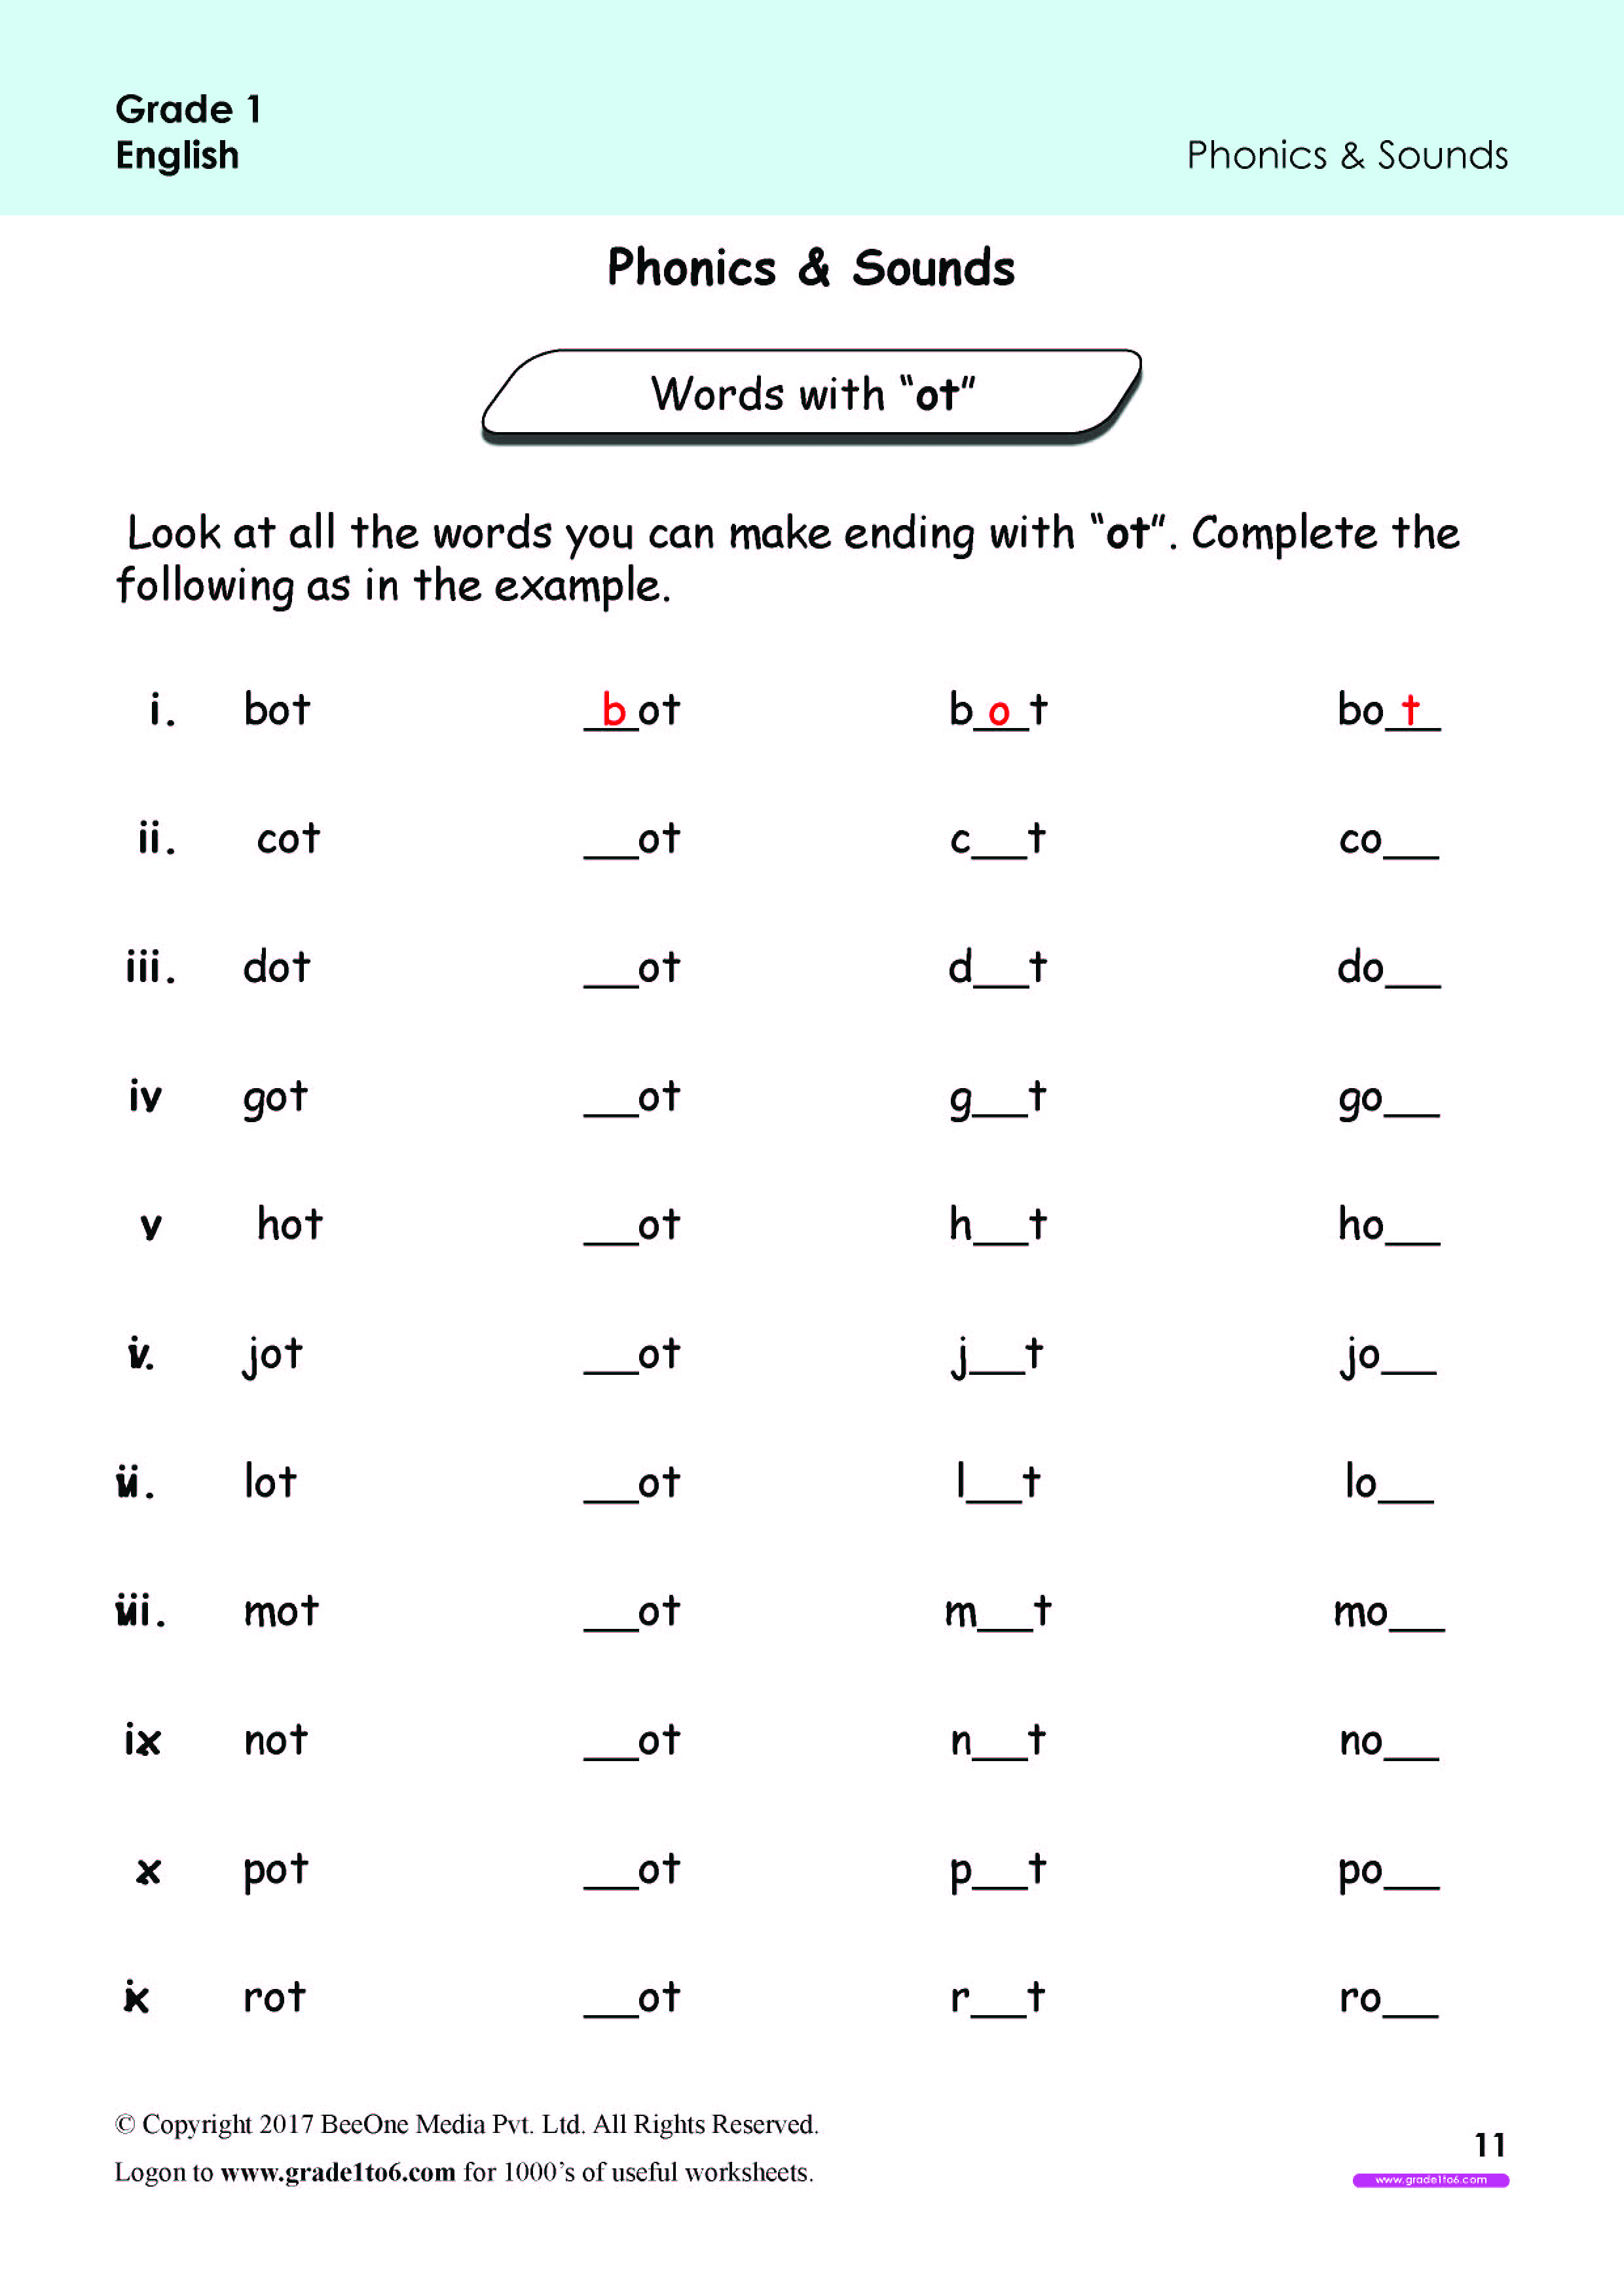 15 Phonics Worksheets Grade 1 Ideas Worksheets English Grammar Worksheets Phonics Worksheets